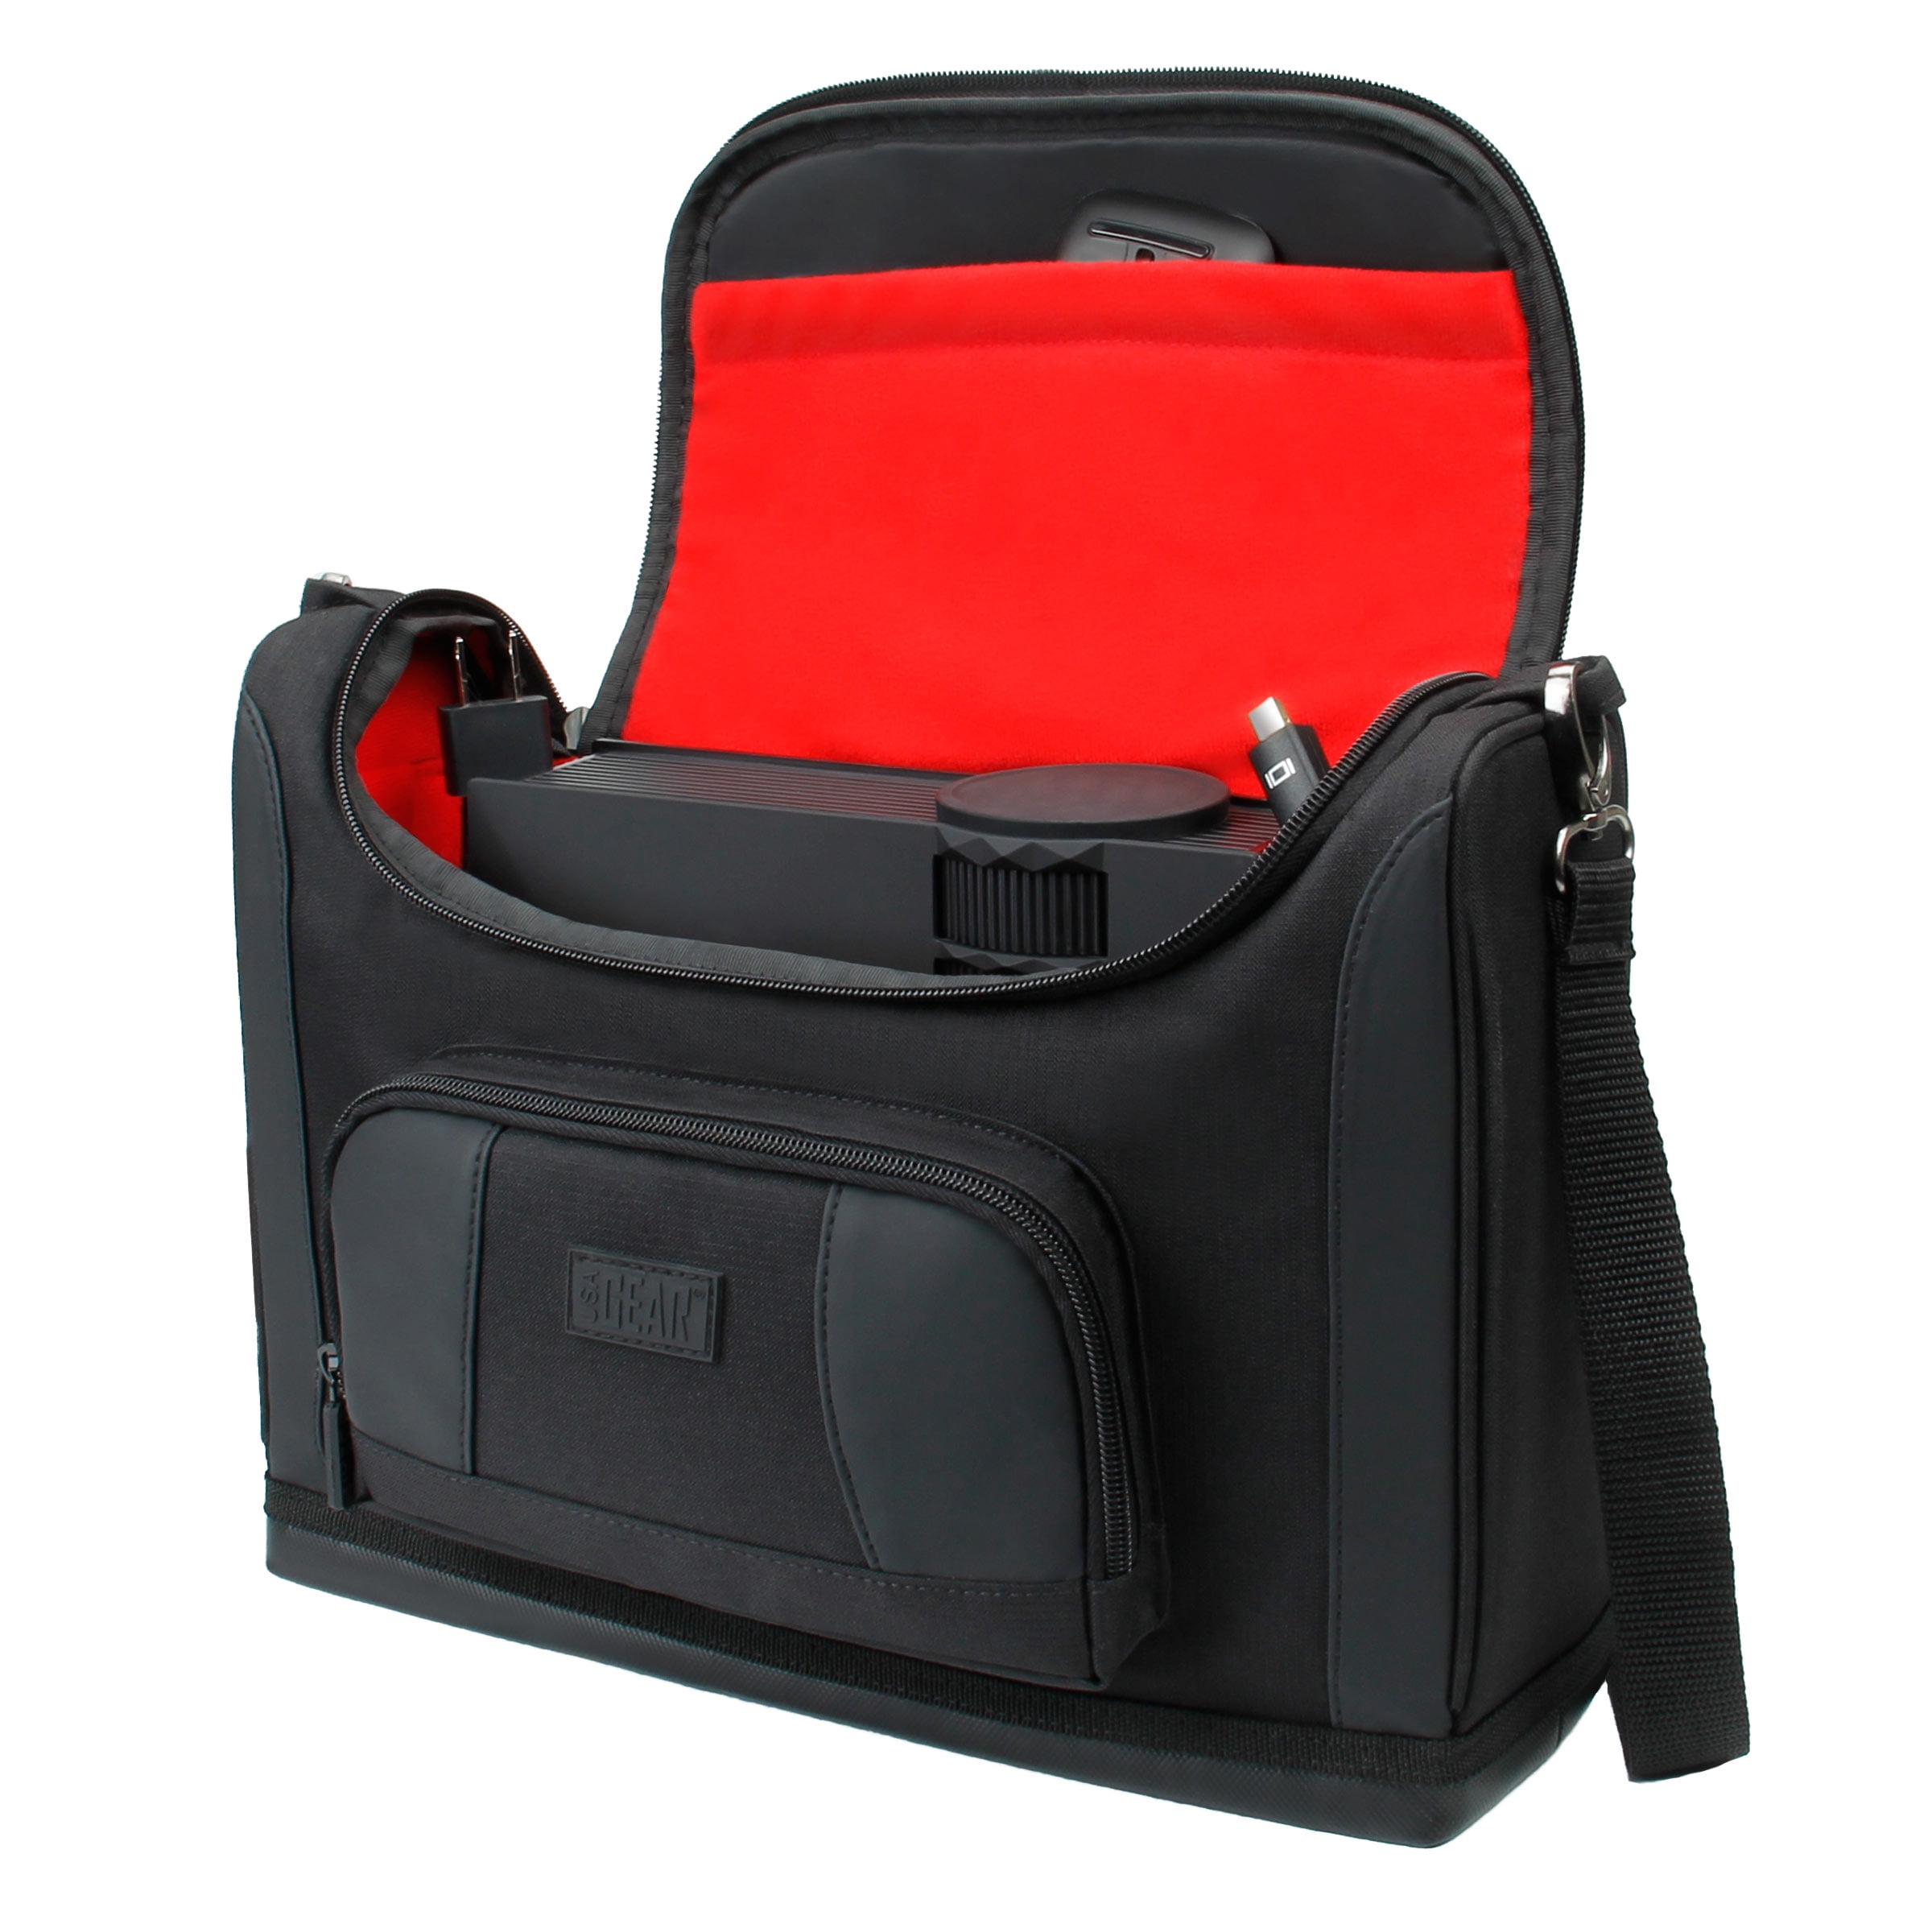 Portable Projector Bag Shoulder Hand Carrying Case for Business Travel Laptop 